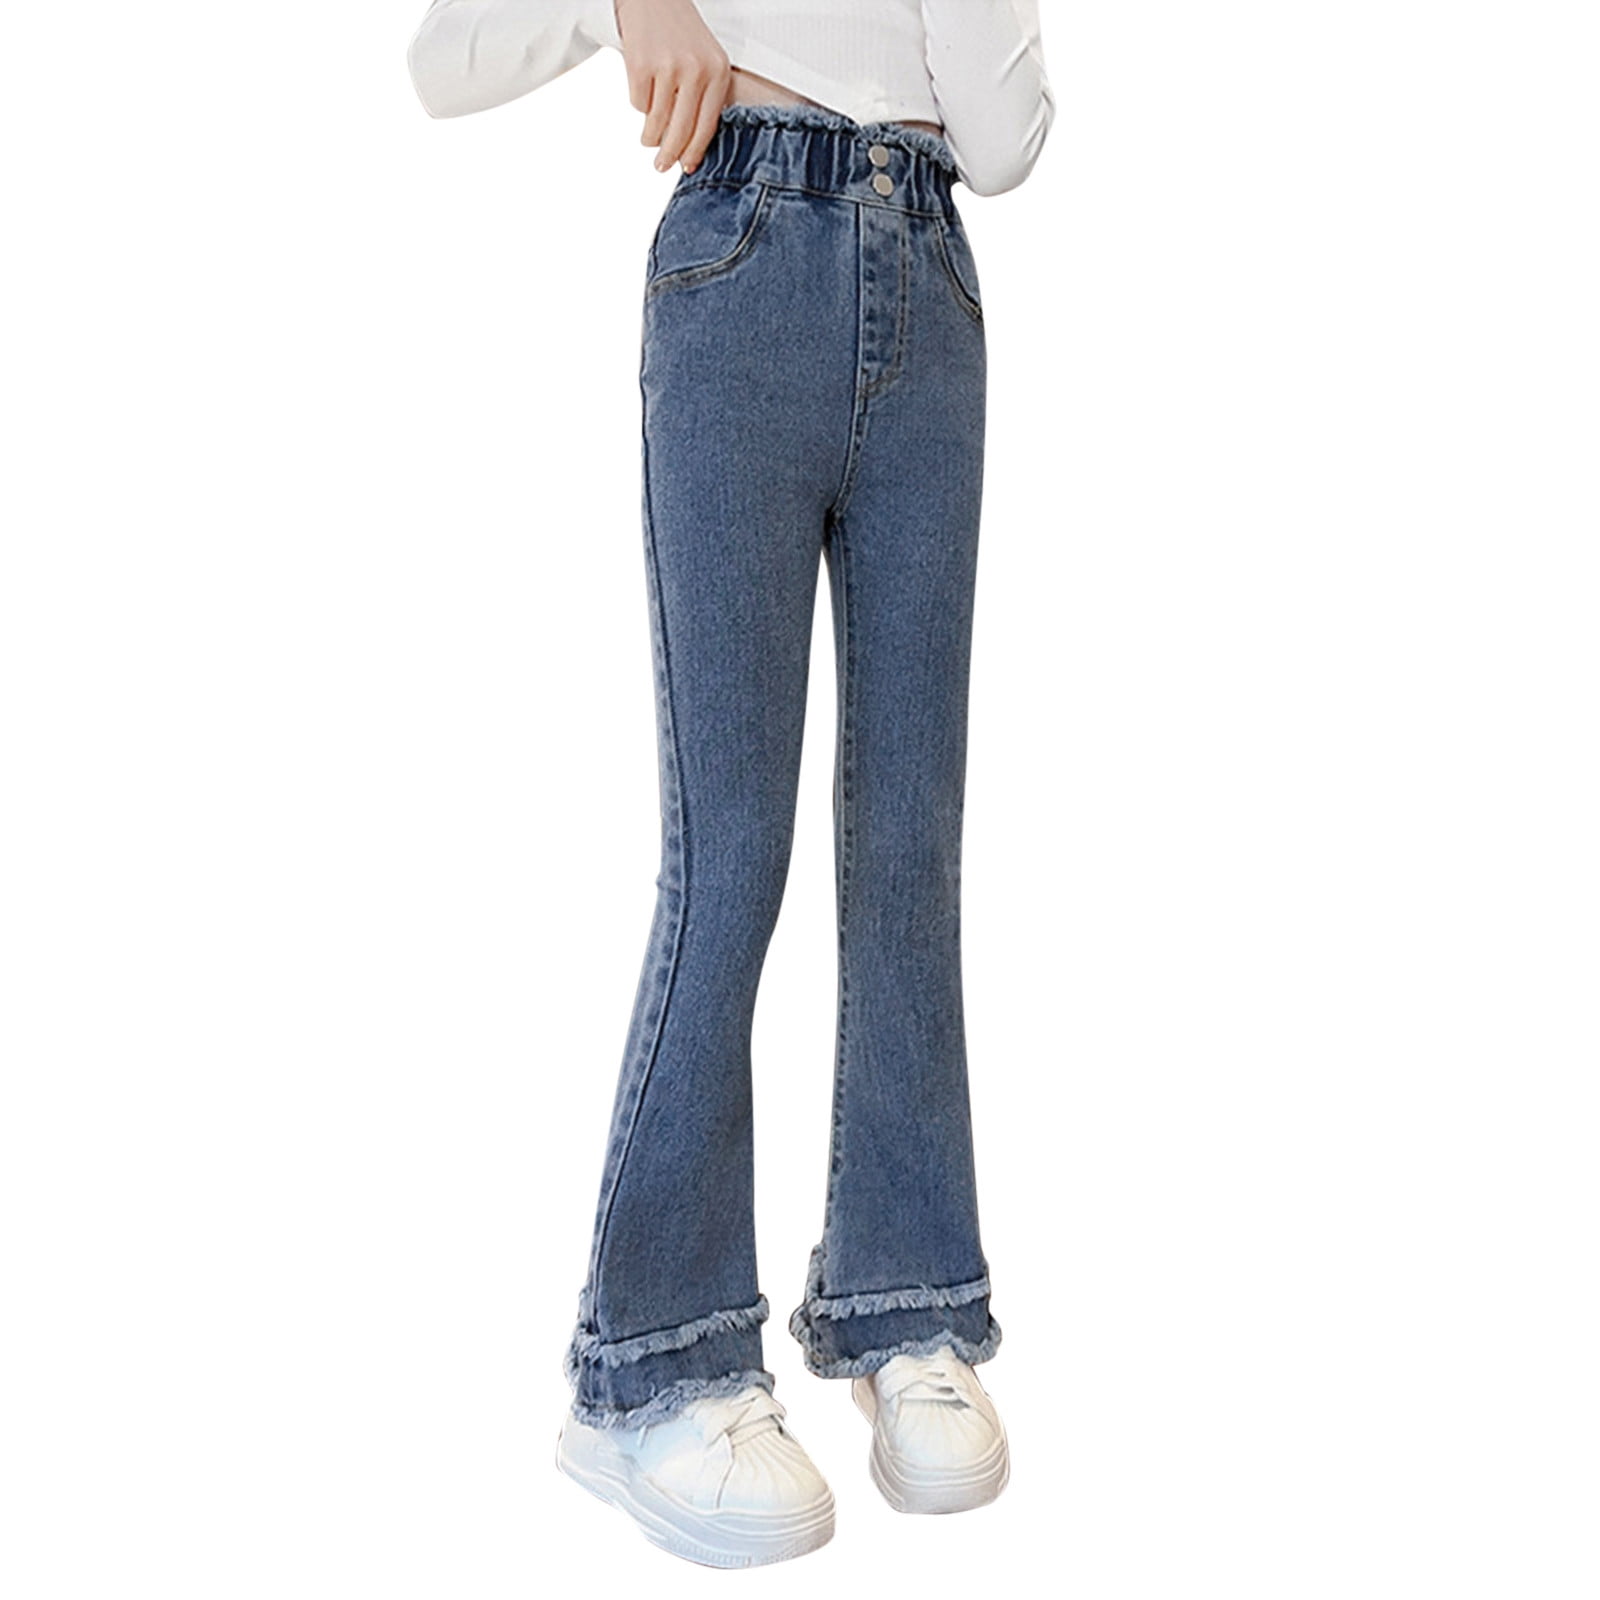 inhzoy Kids Girls High Waist Distressed Flared Jeans Bell Bottom